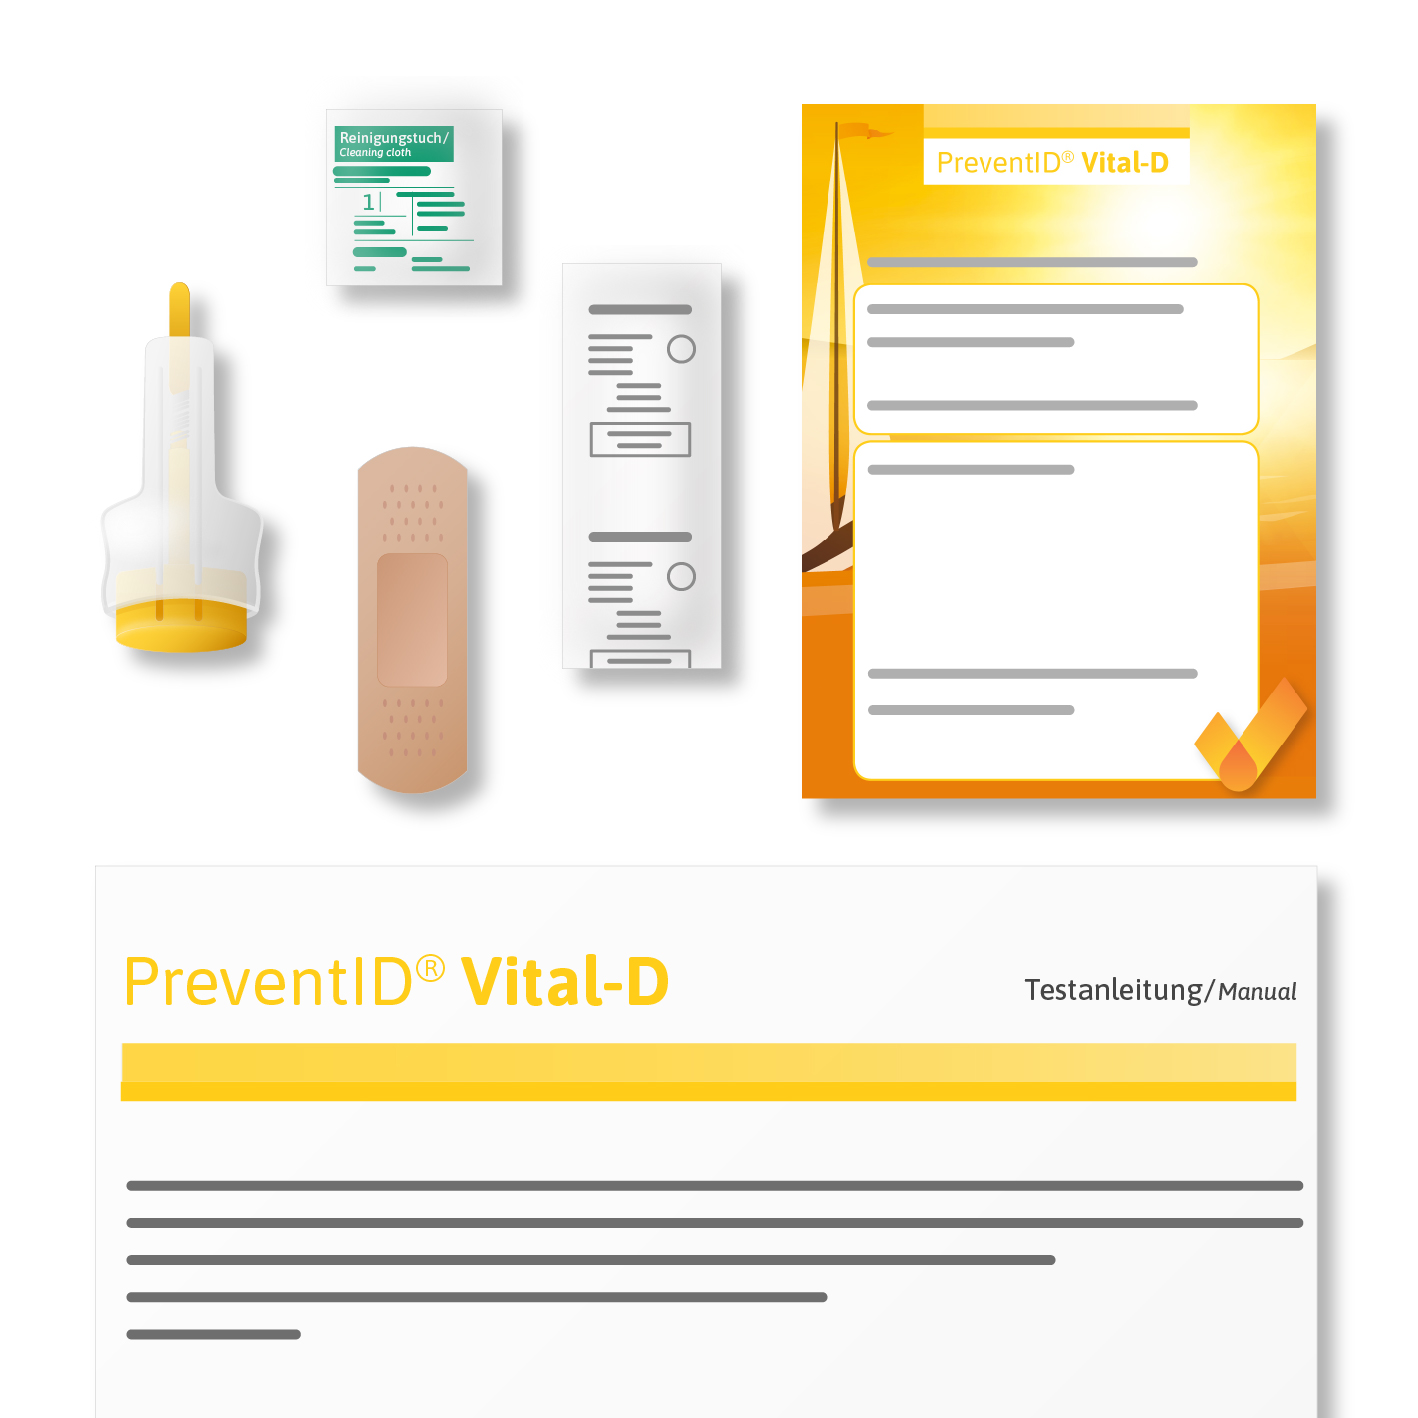 Components PreventID Vital-D